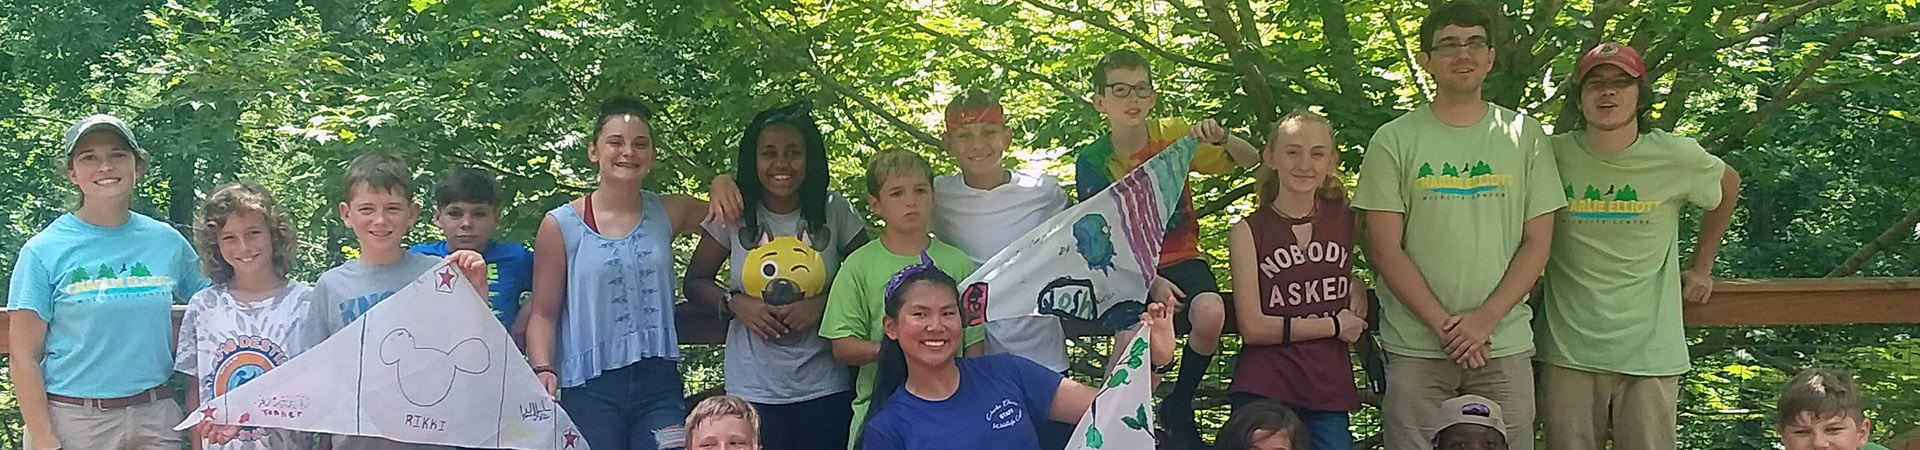 Group of Kids at Summer Camp